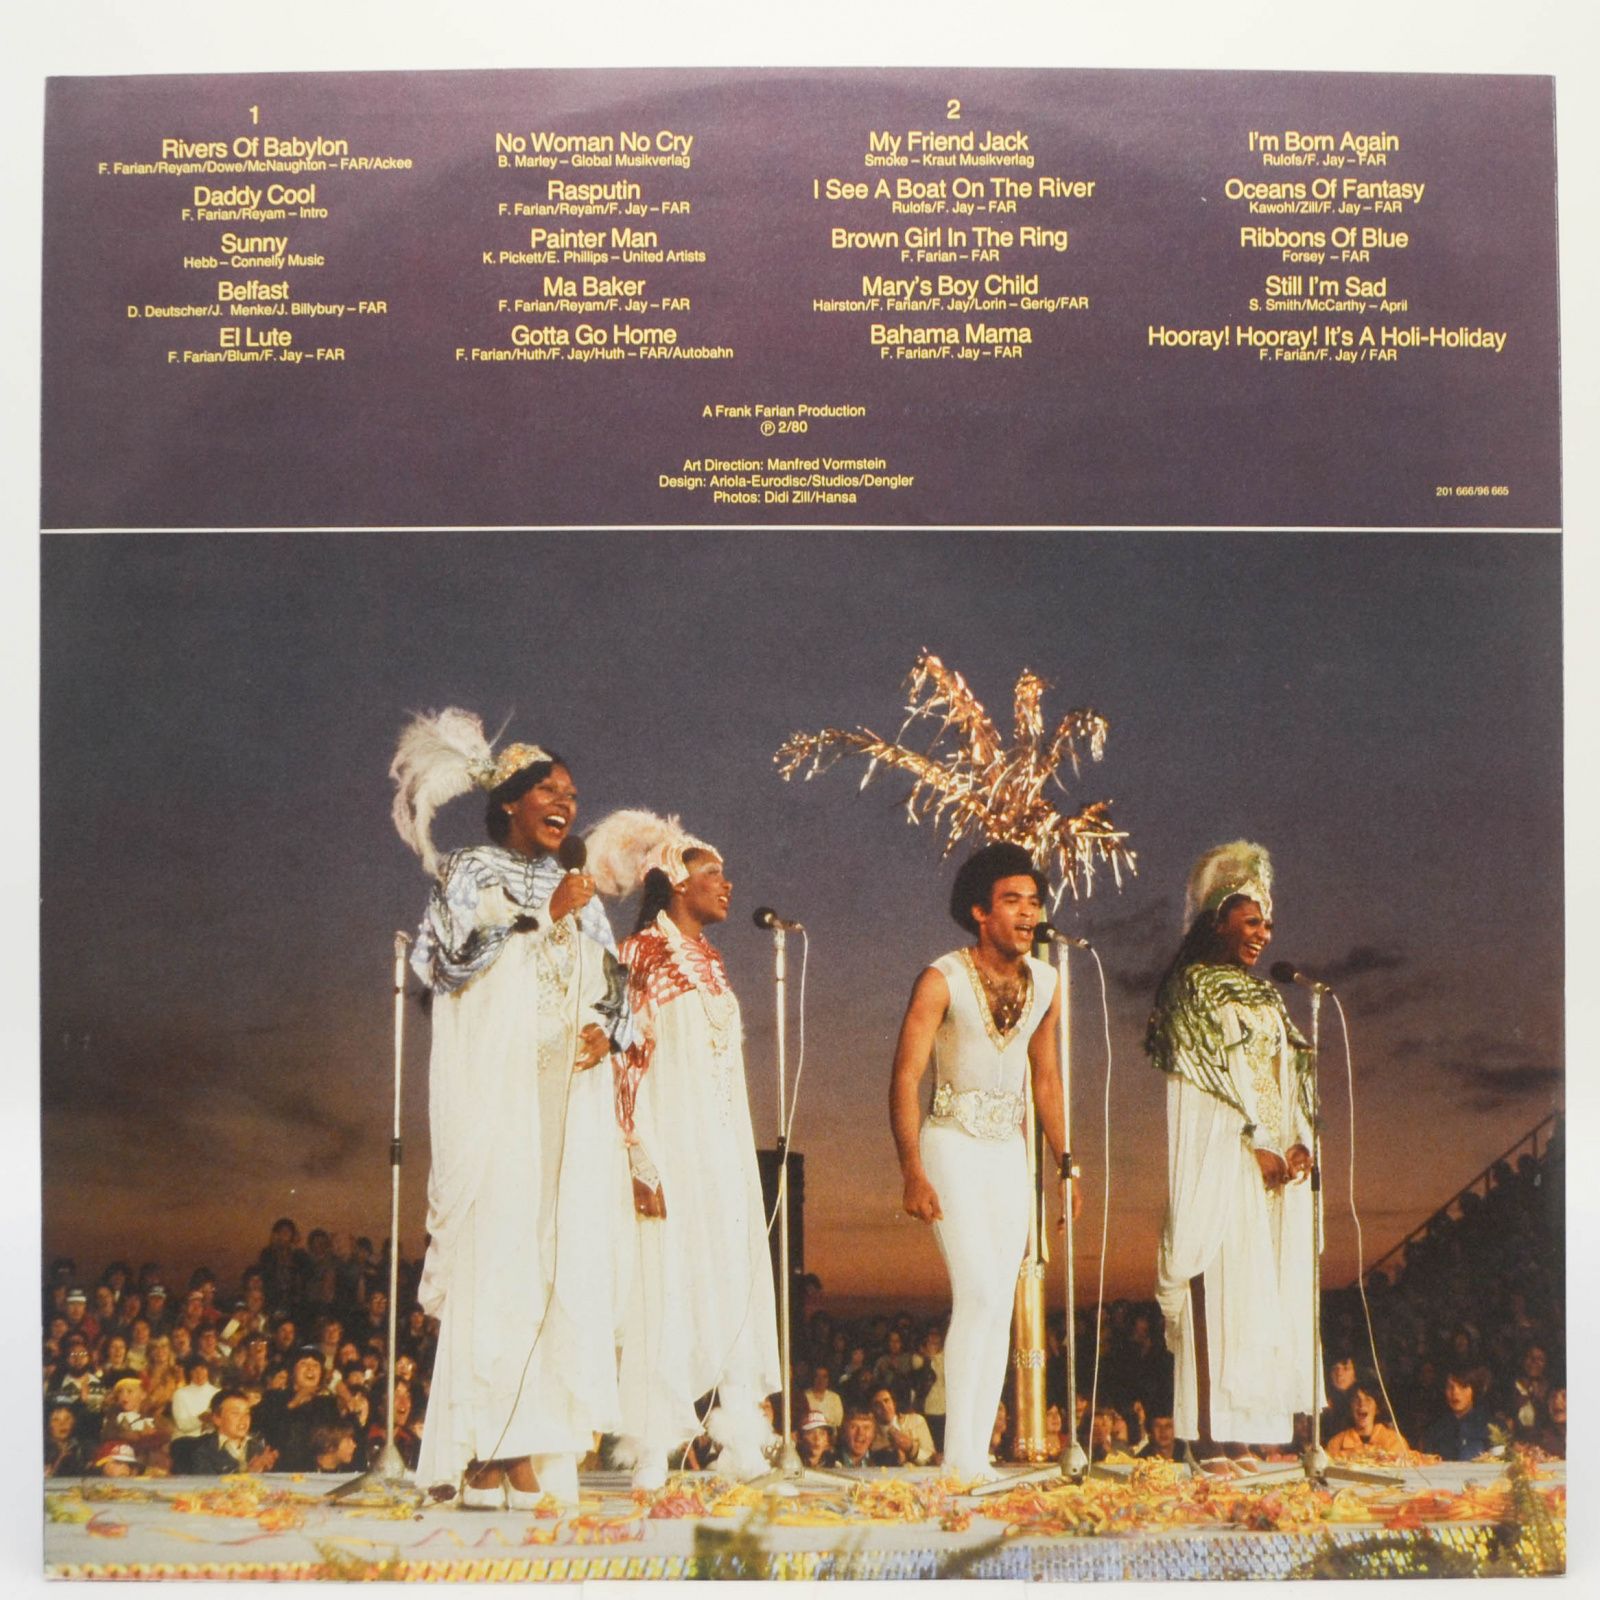 Boney M. — The Magic Of Boney M. - 20 Golden Hits, 1980